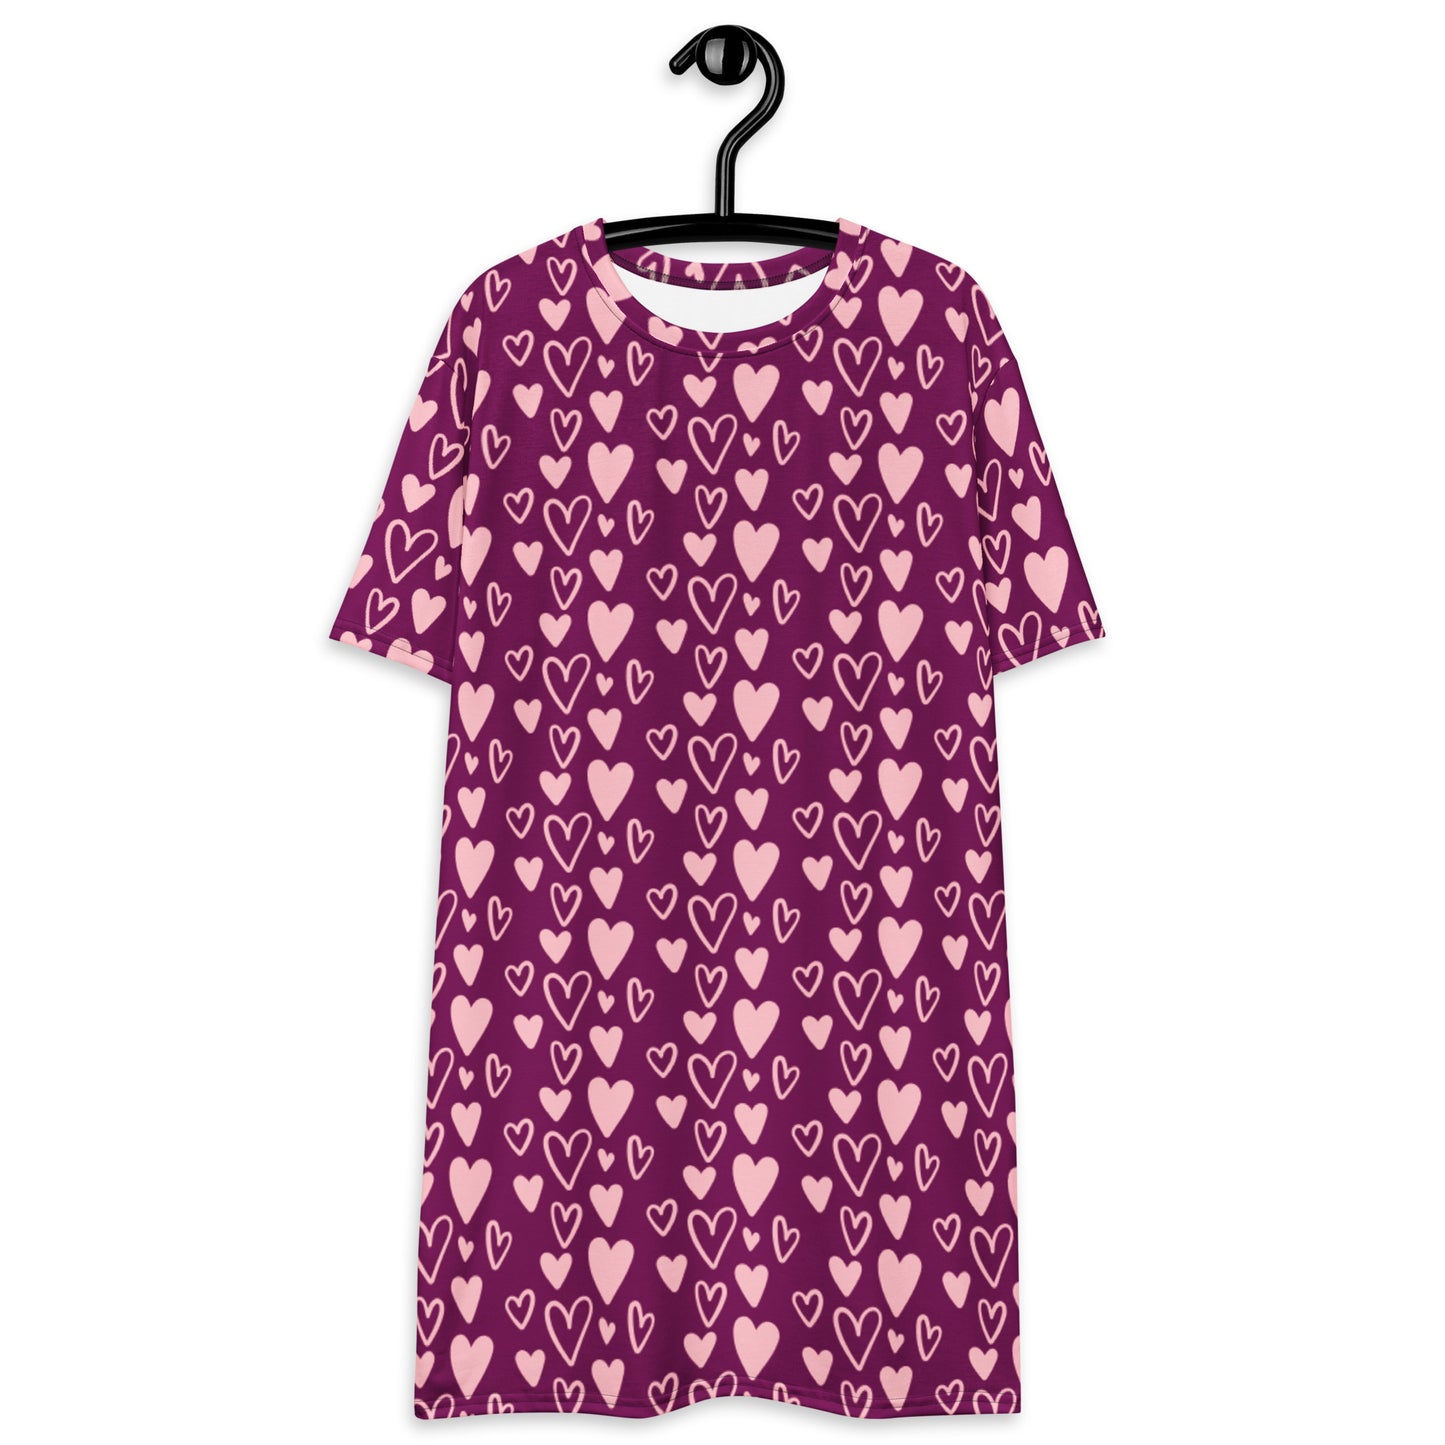 Love Pattern T-shirt Dress